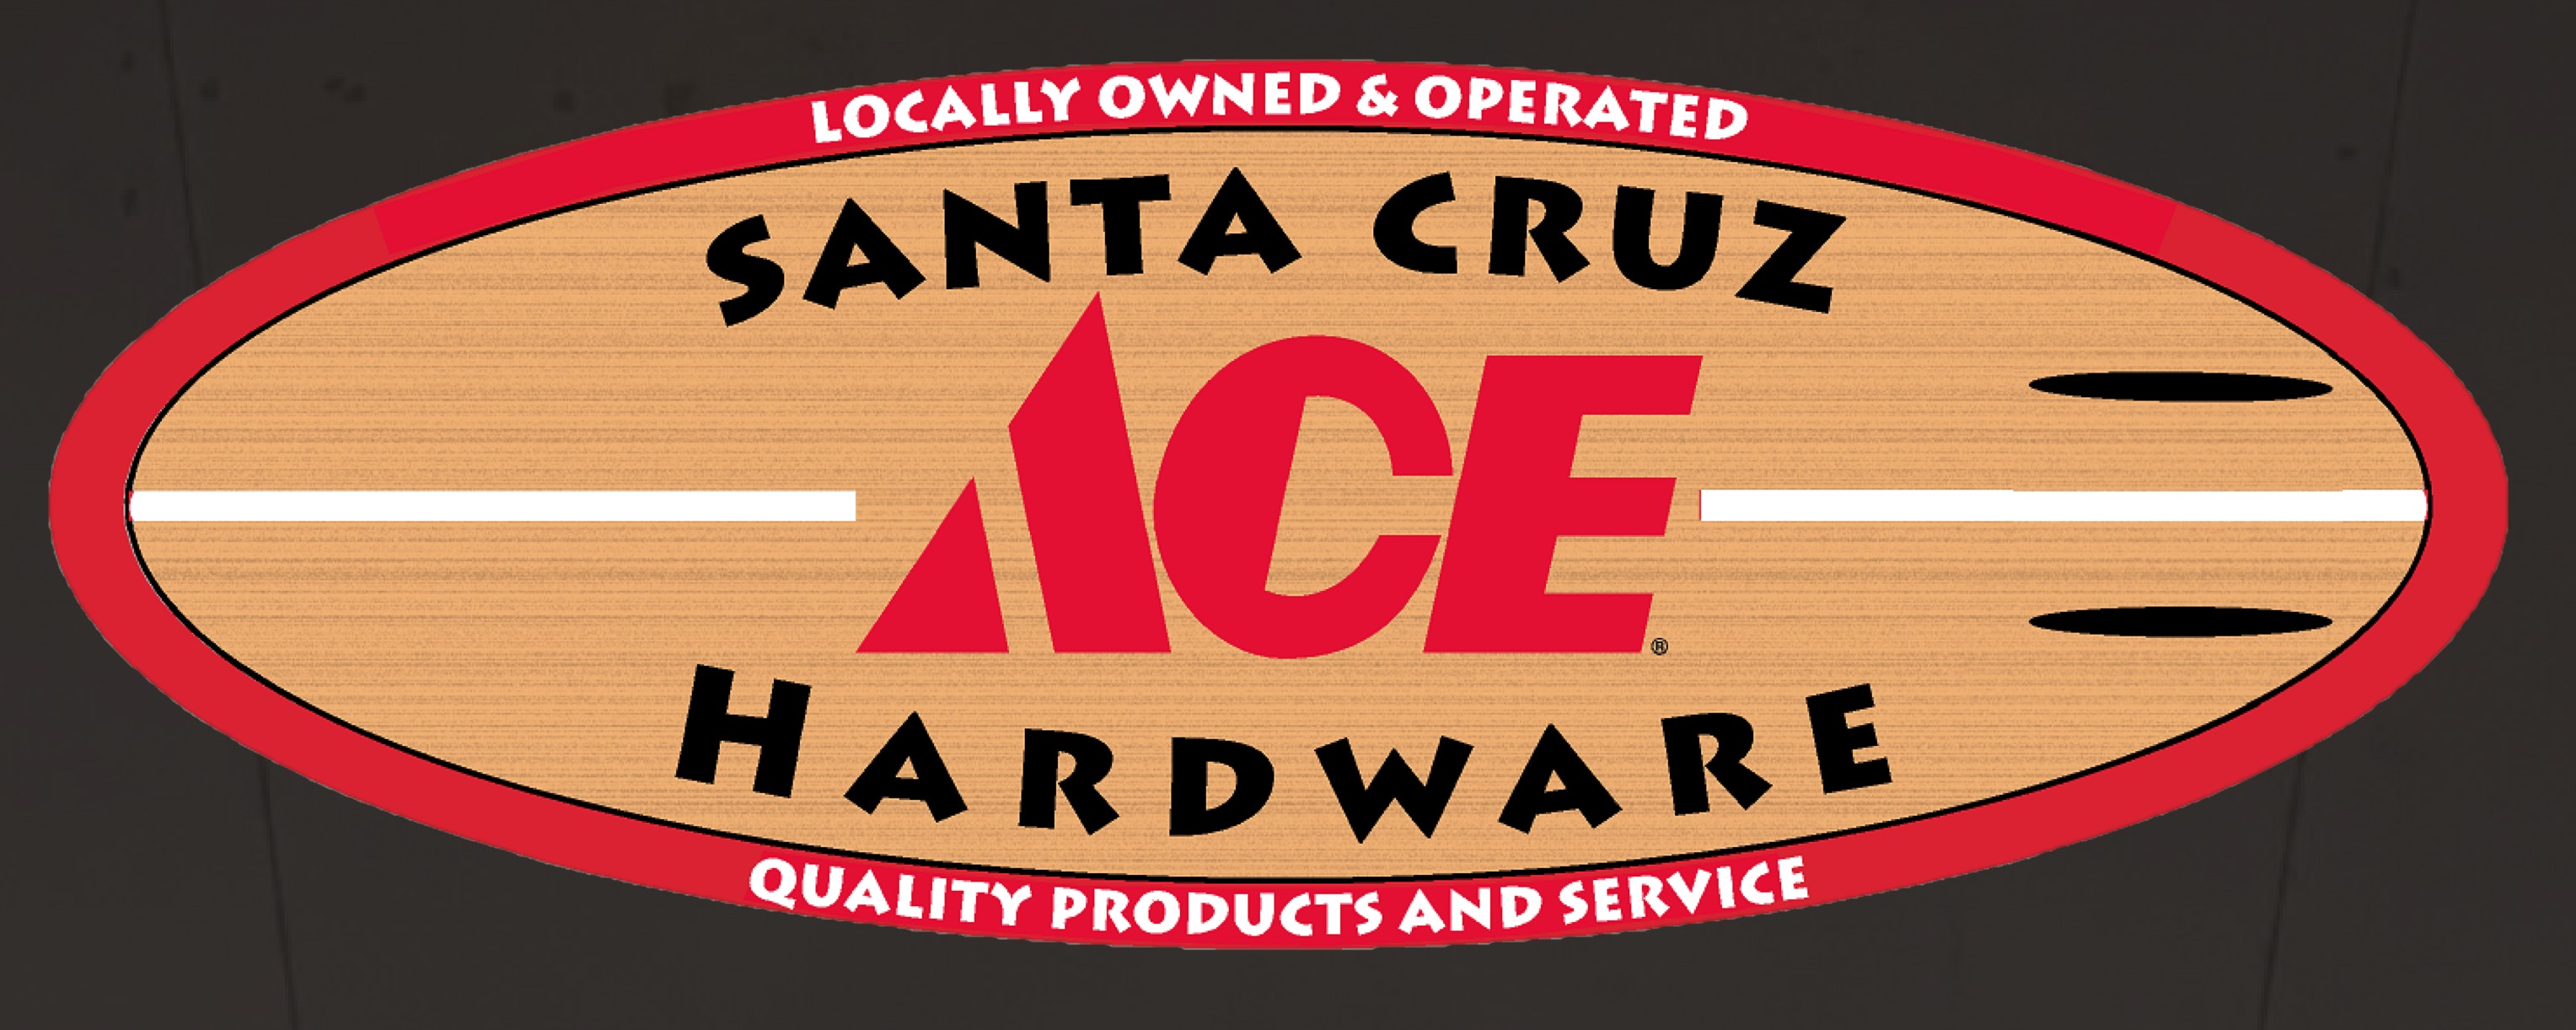 Santa Cruz Ace Hardware